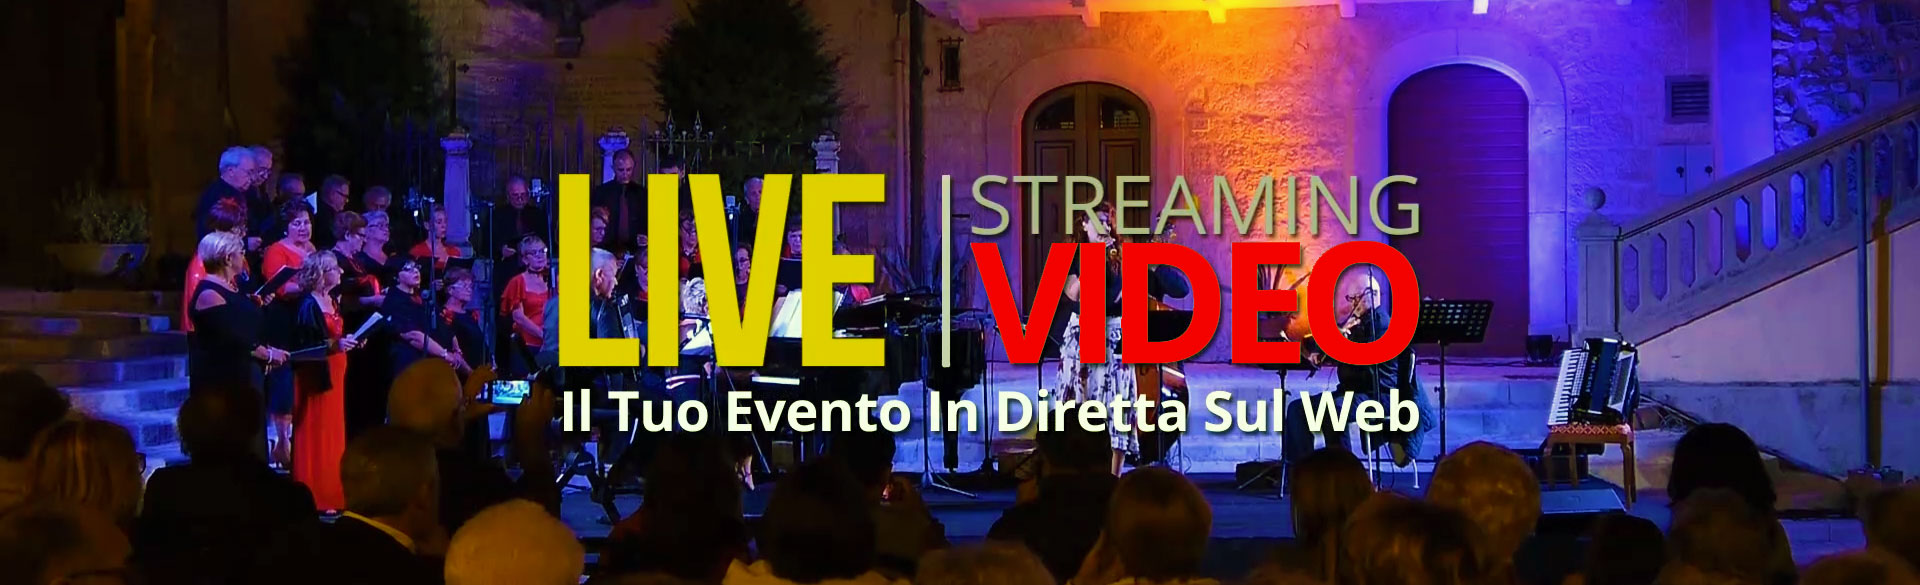 Riprese video professionali in diretta streaming per eventi istituzionali